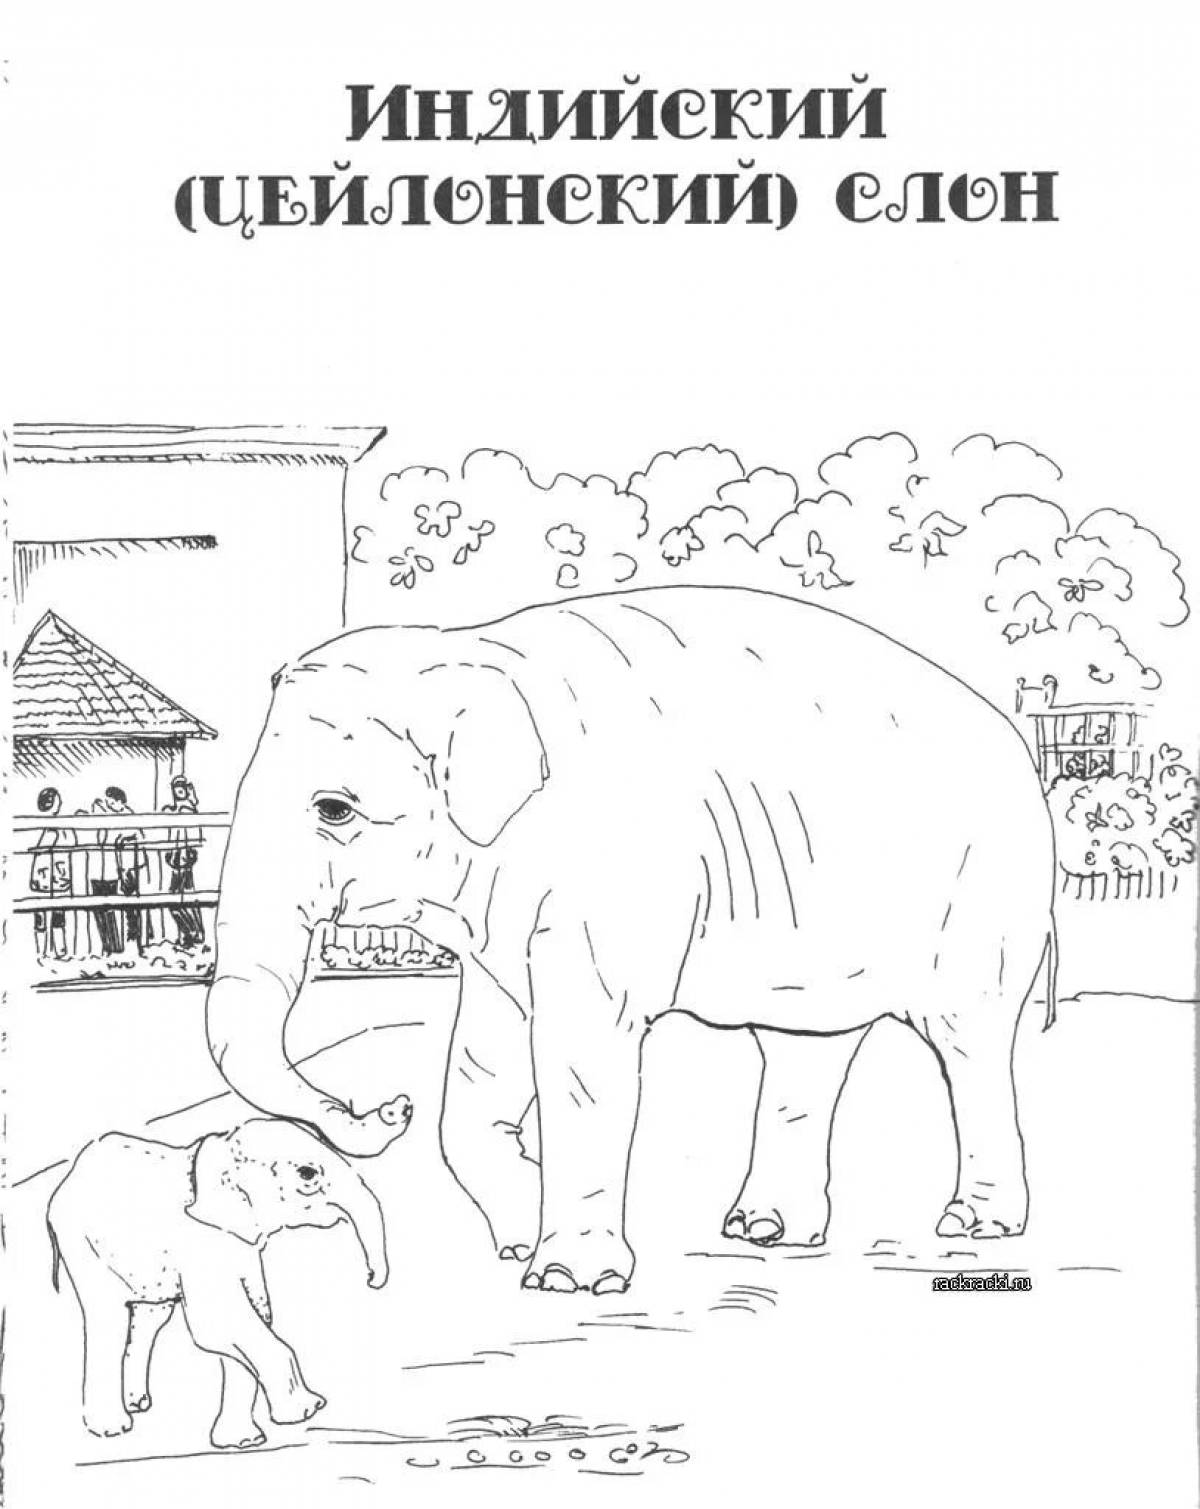 Amazing elephant coloring book